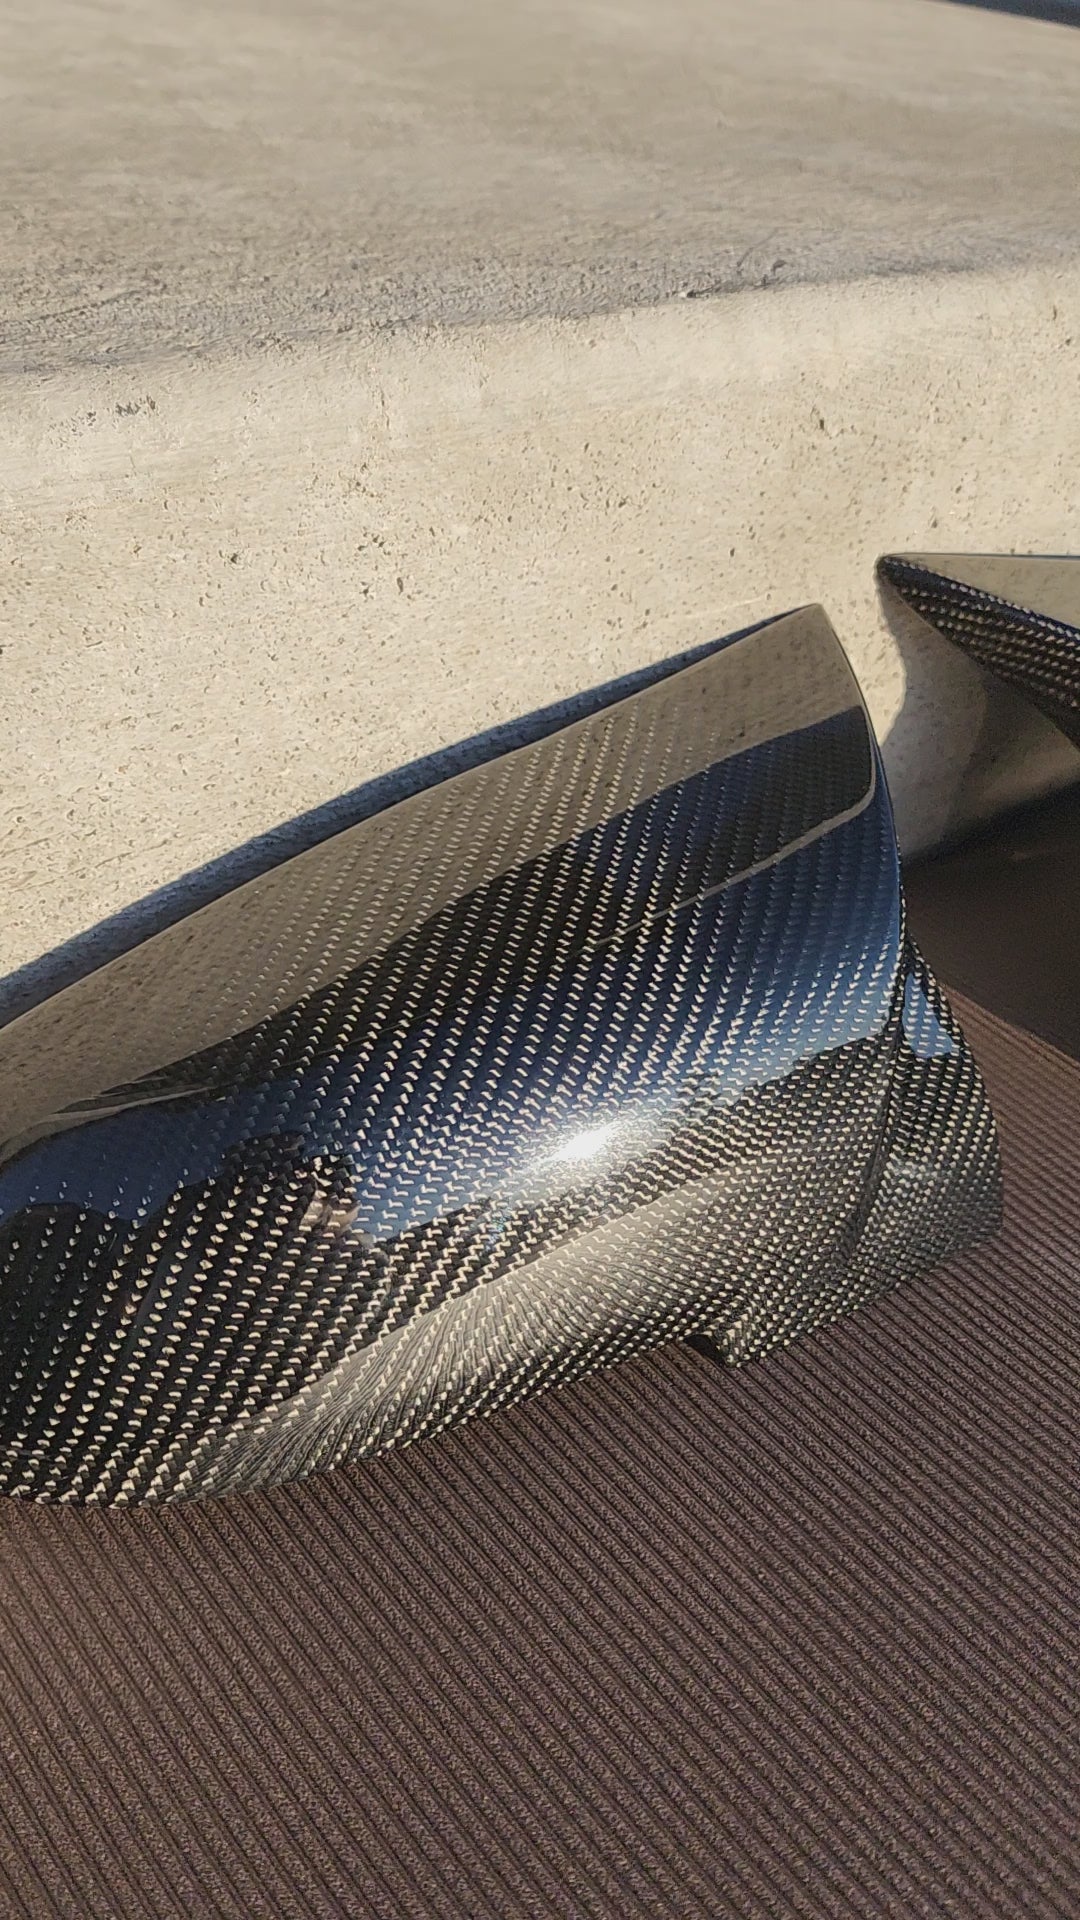 BN Aero F Series M Style Carbon Fiber Mirror Caps